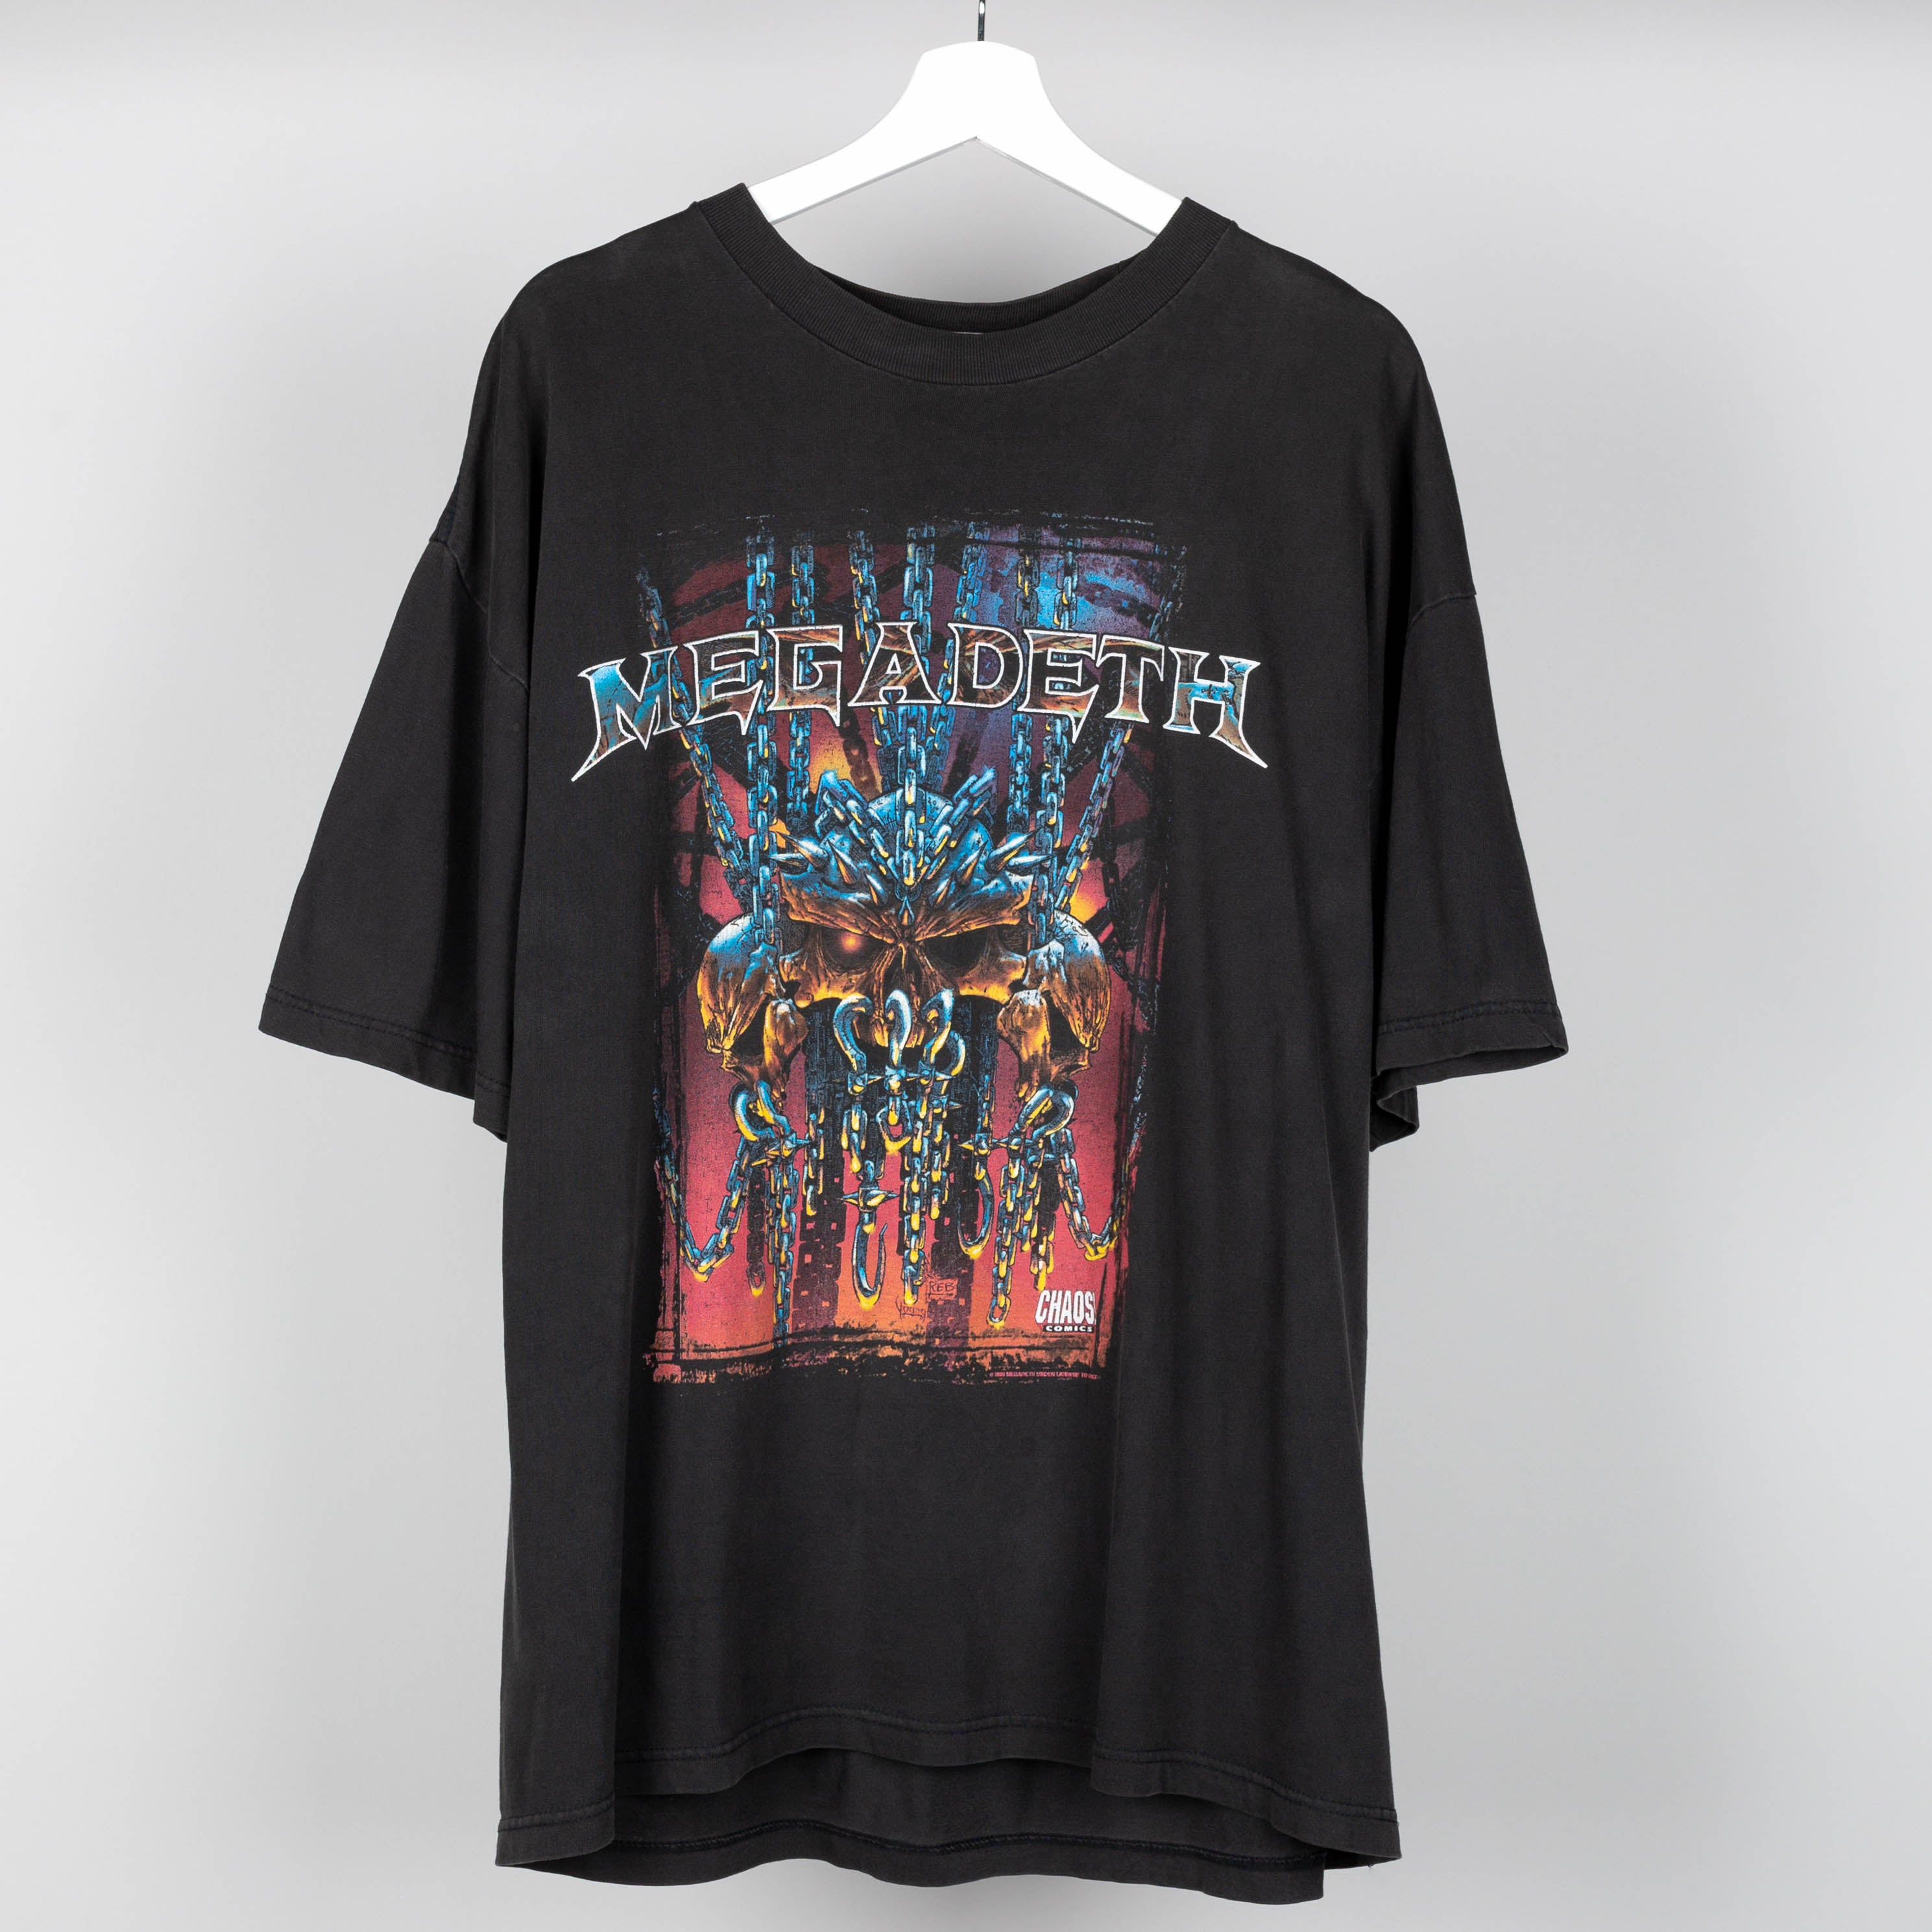 1998 Megadeath T-Shirt Size XL